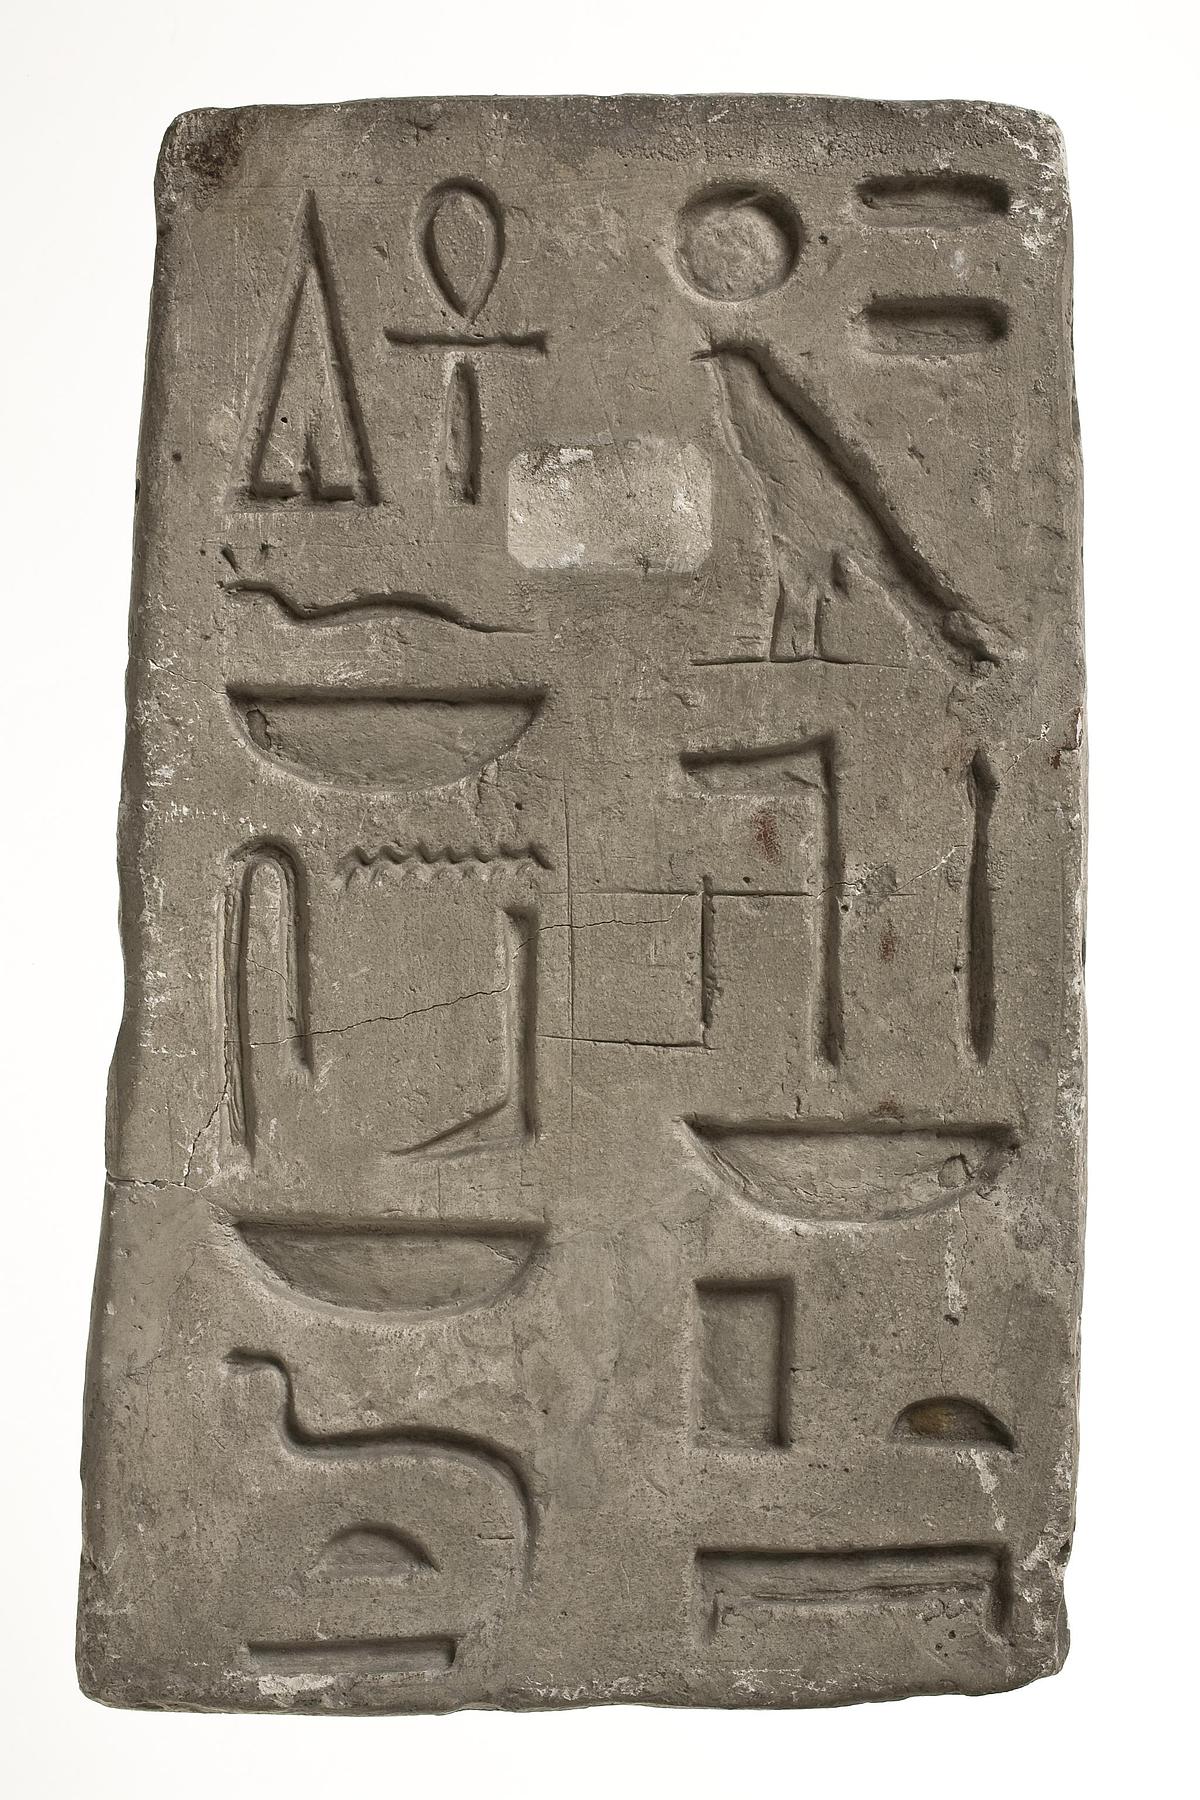 Hieroglyphic inscription, L206